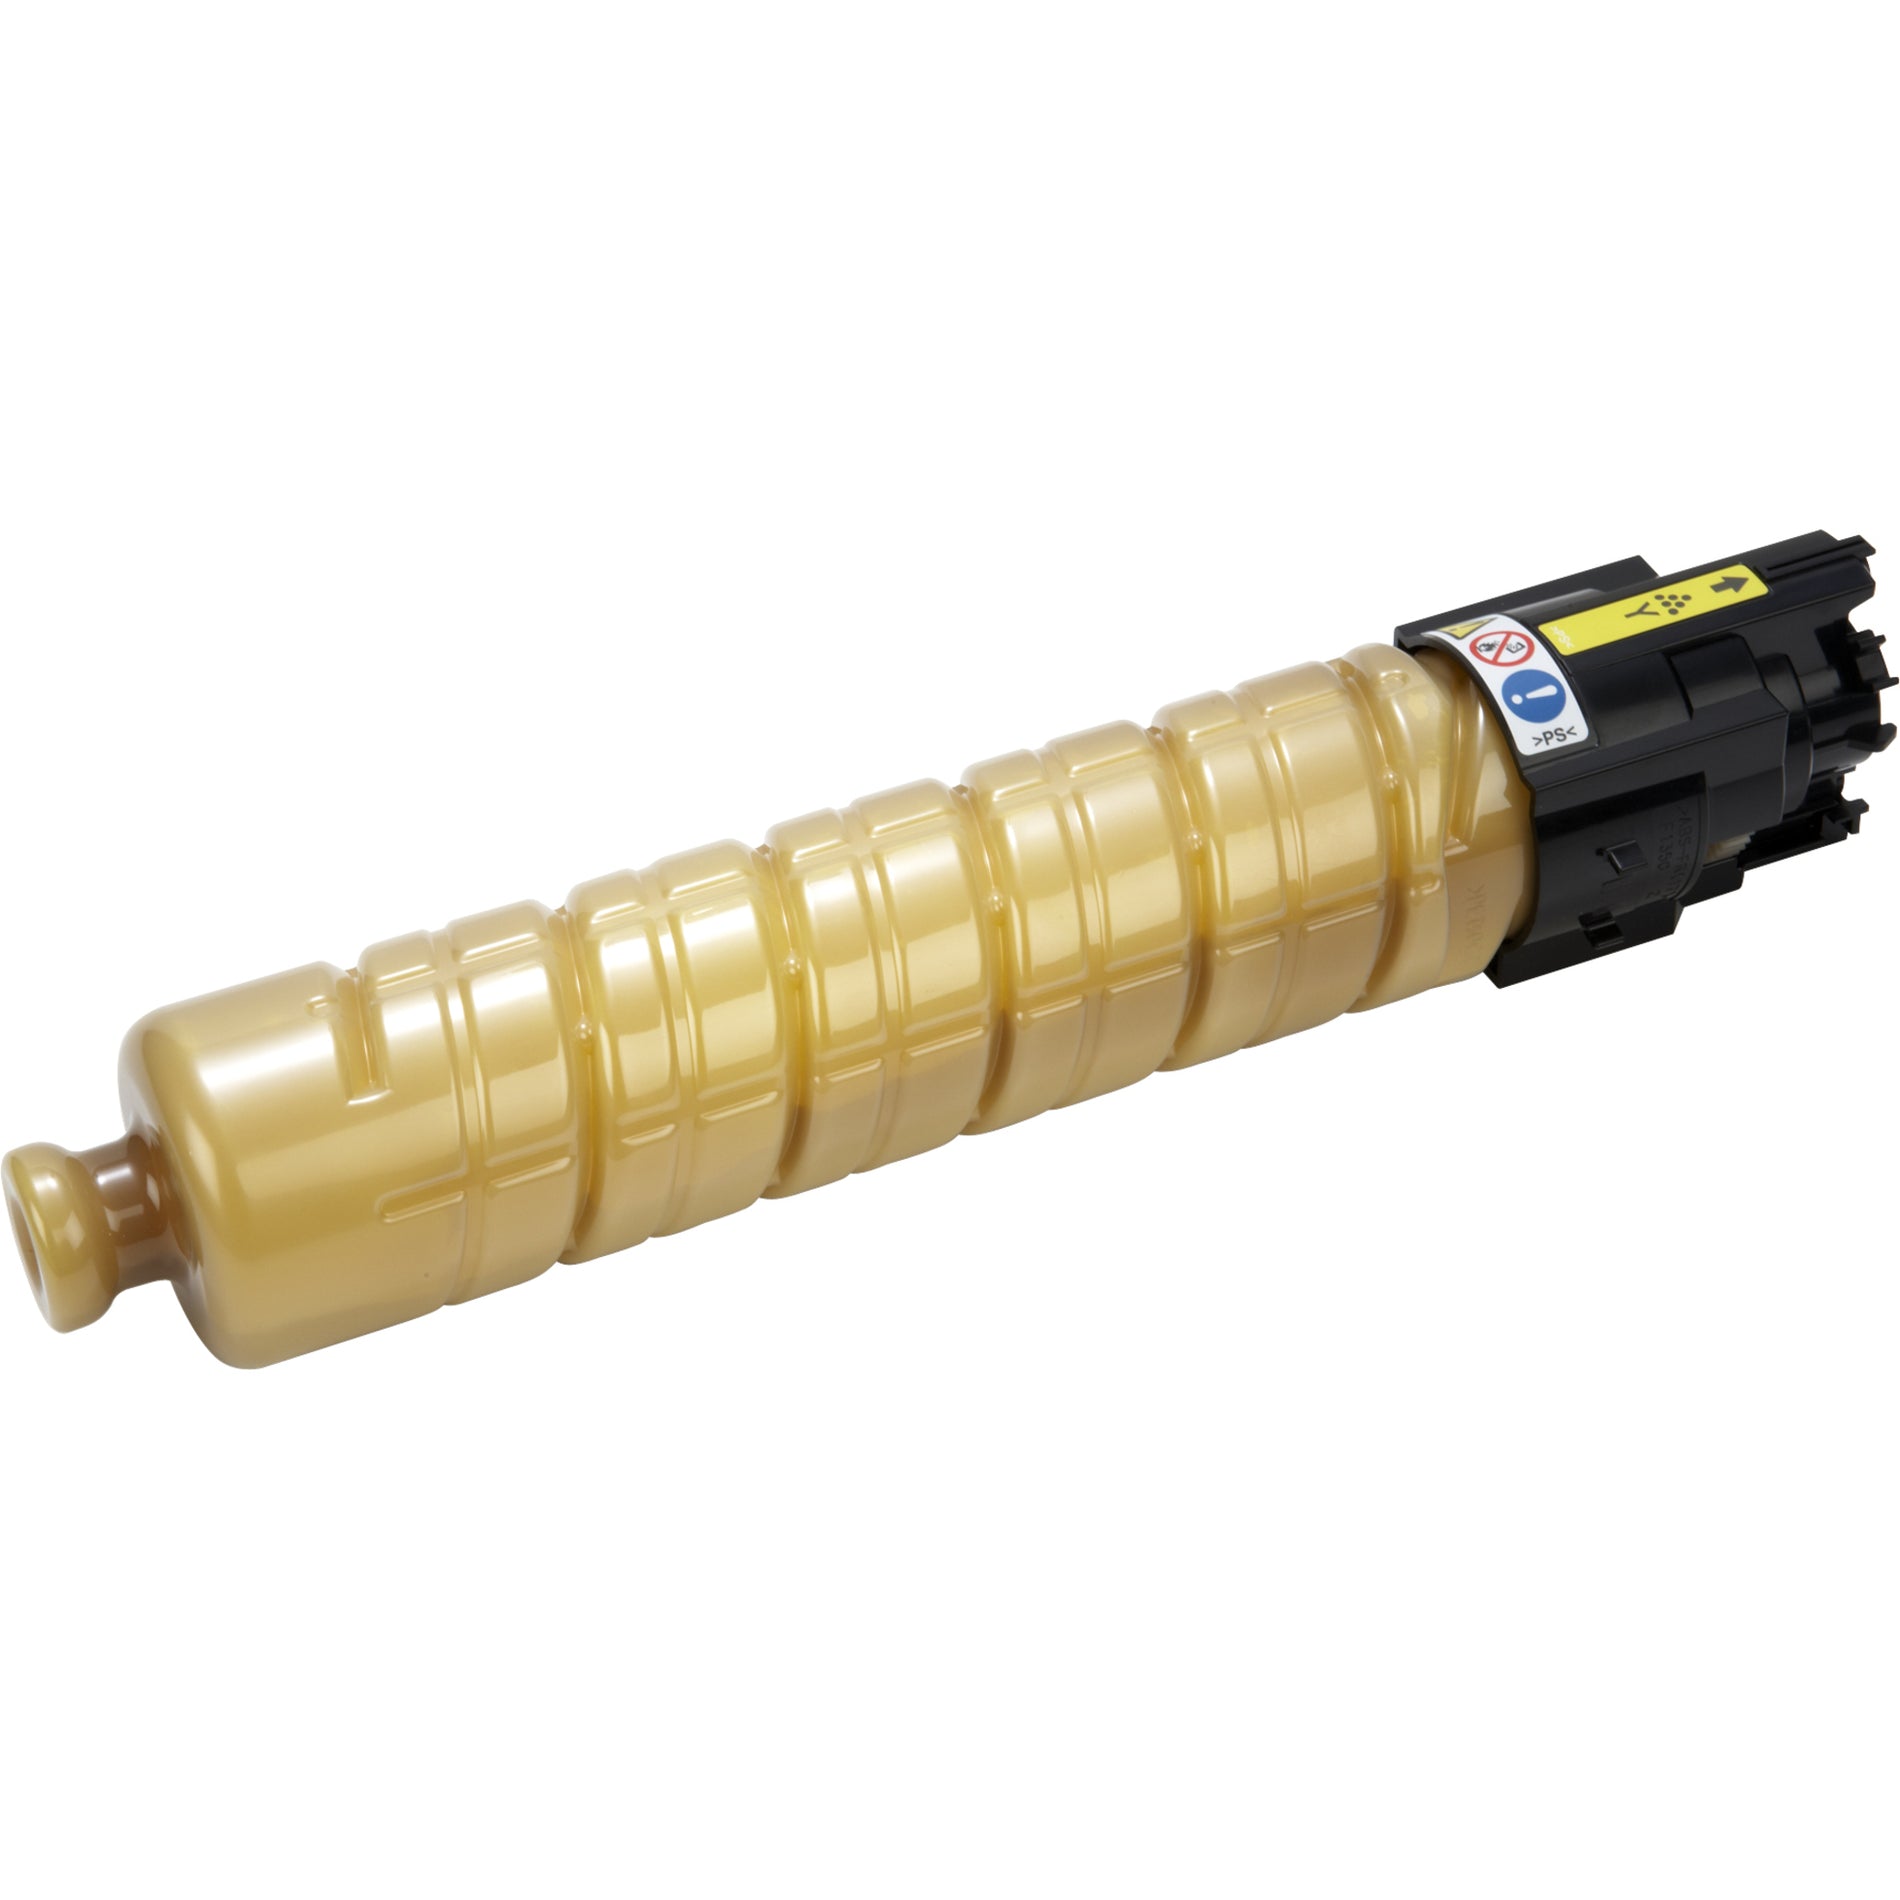 Ricoh Yellow Toner Cartridge for Aficio SP C430DN [Discontinued]